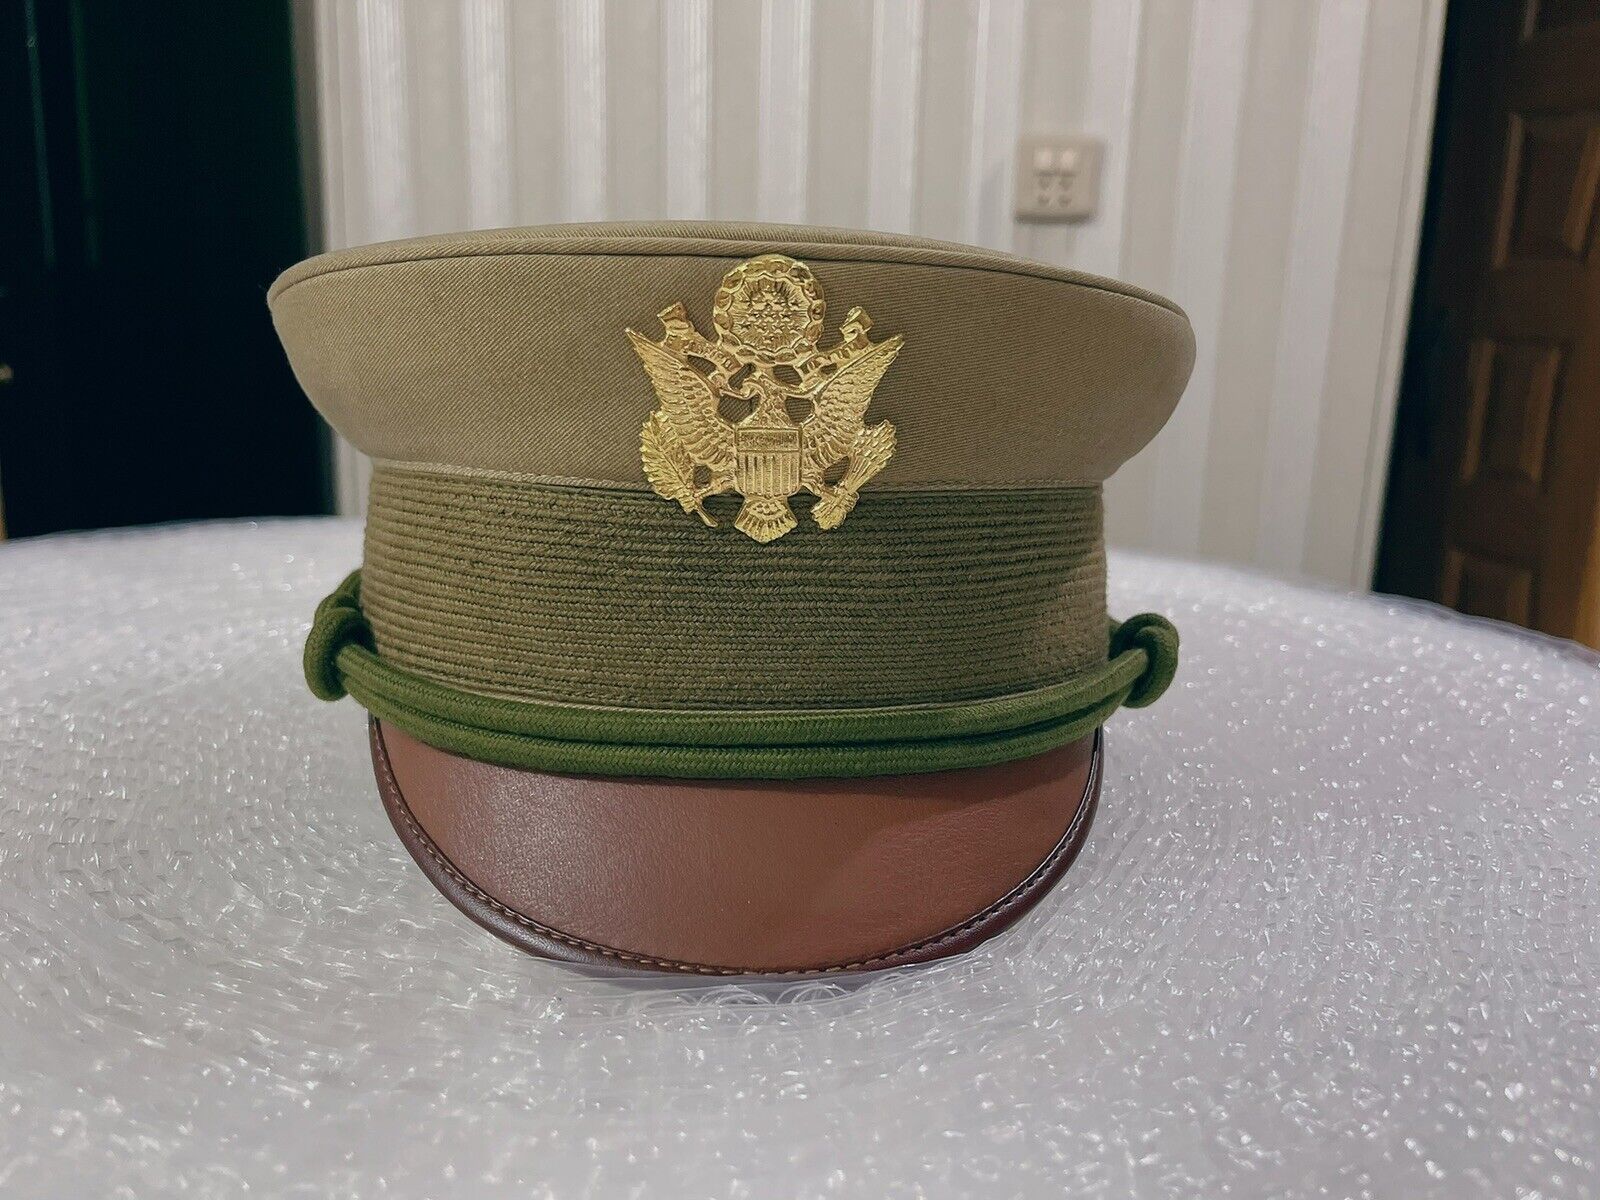 Pre/Early WW1 Period Named U.S. Army Cadet Visor Hat-LAMBERTON REPLICA (NOT ORIG